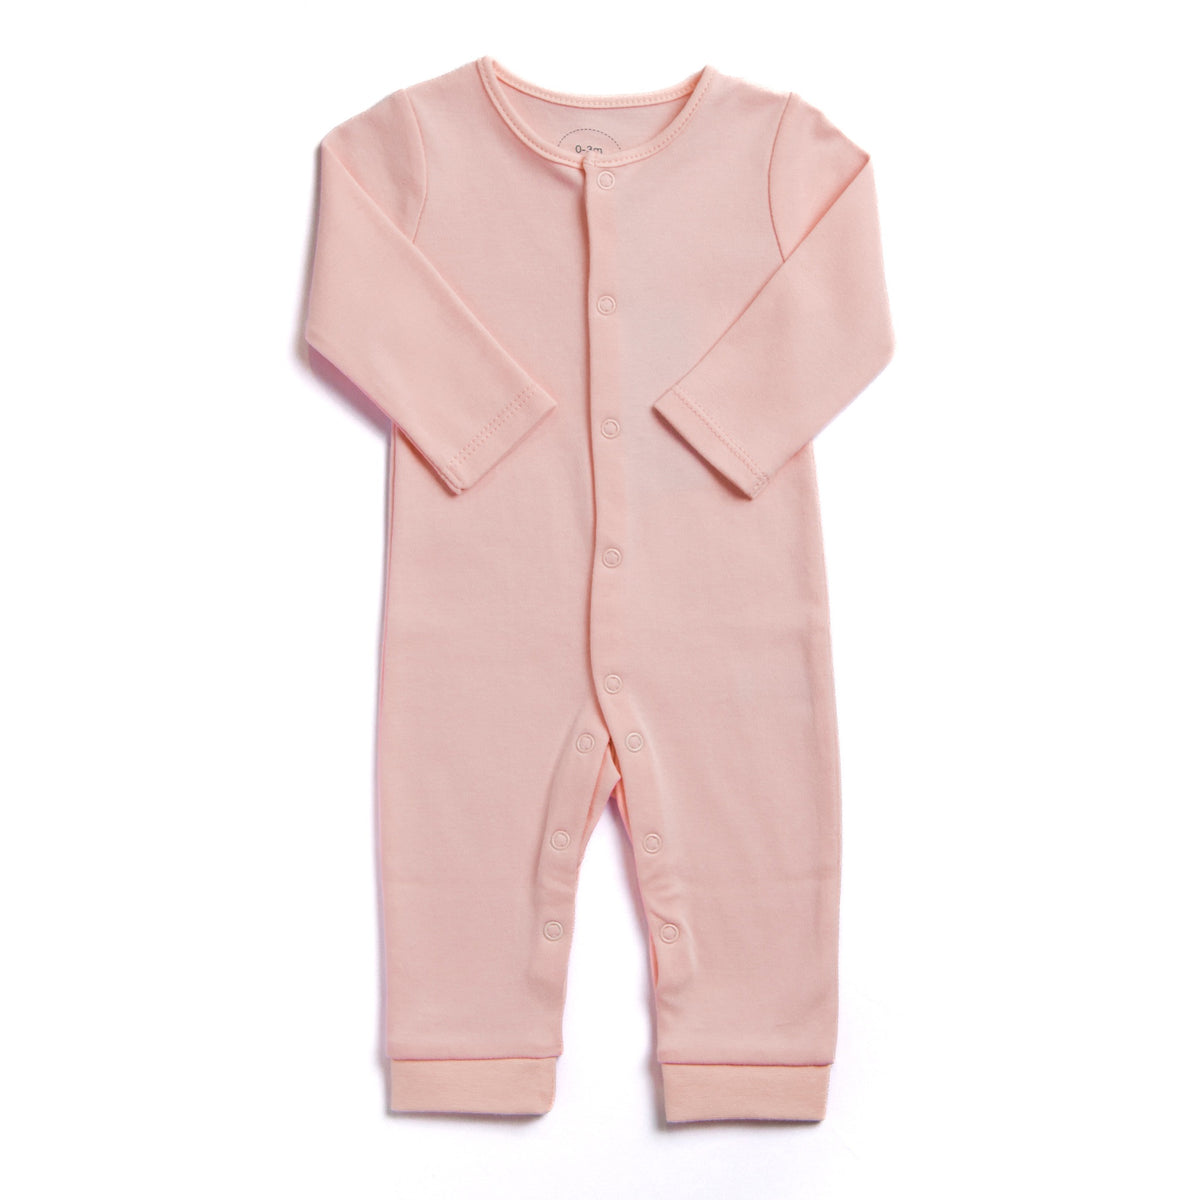 Baby Pink Snap Closure Cotton Jumpsuit